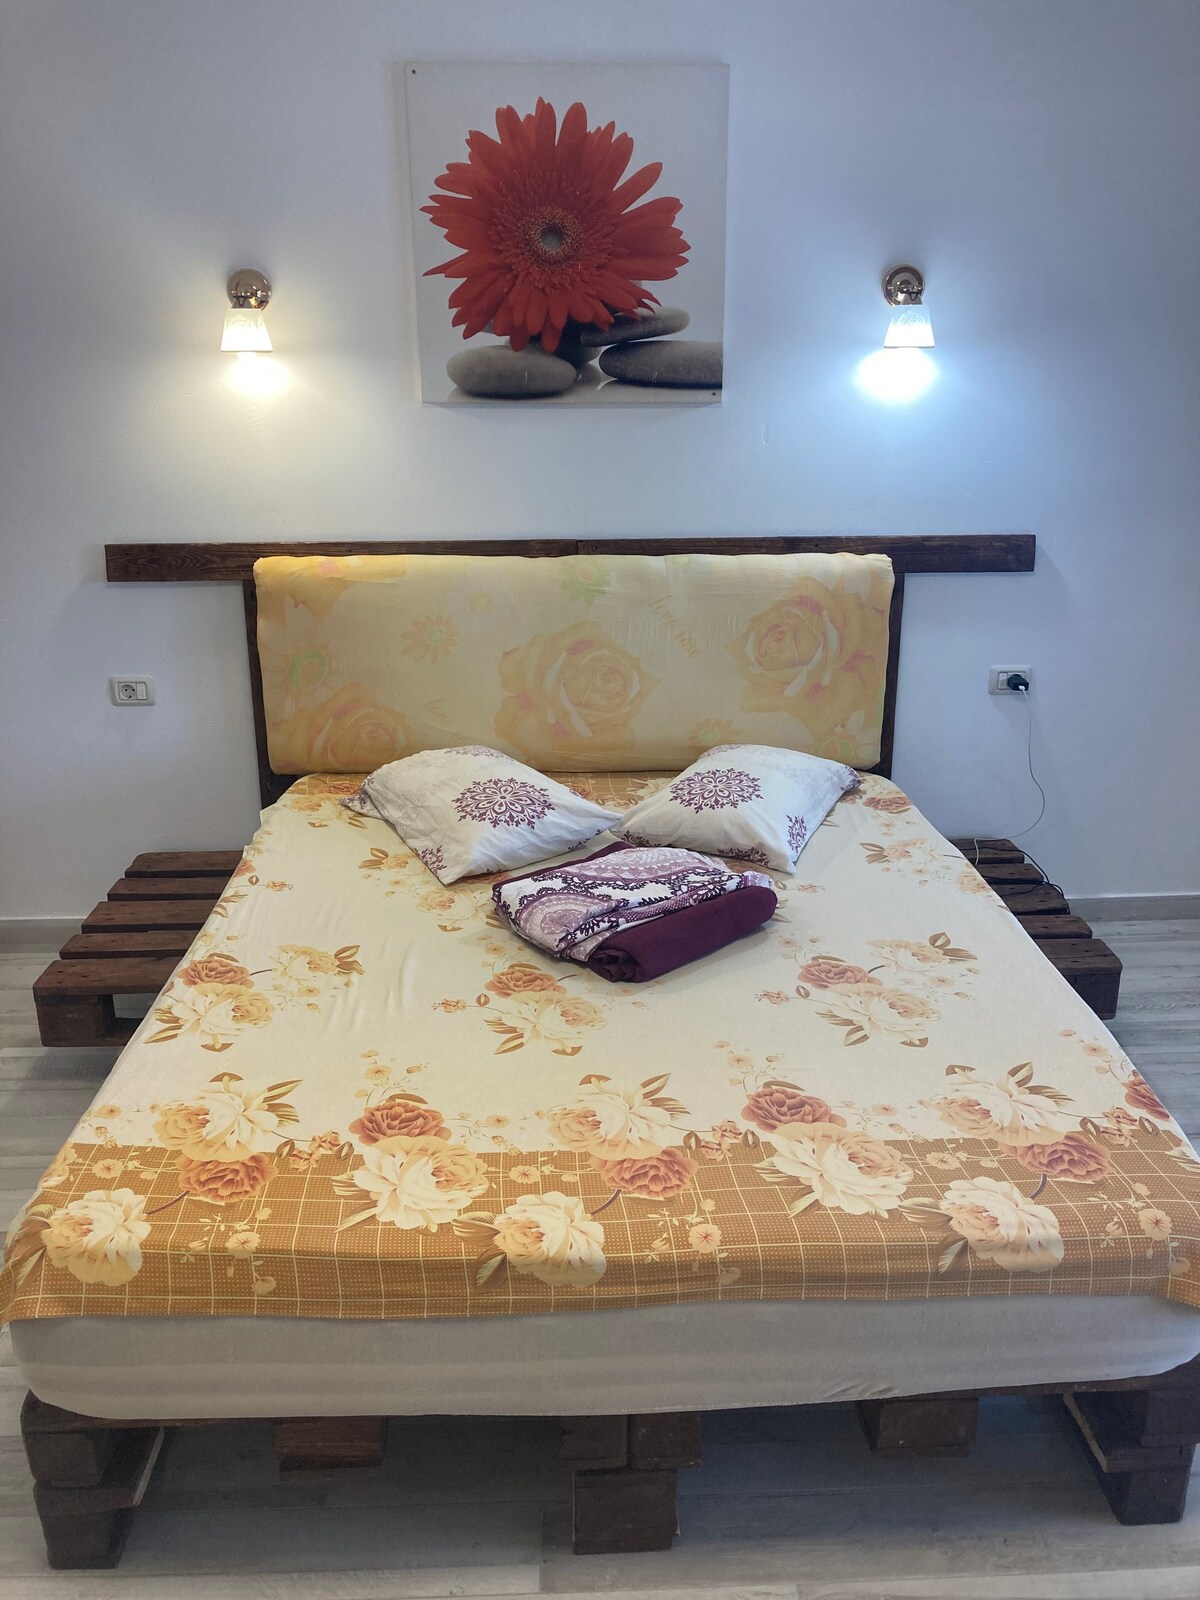 One bedroom/bathroom/patio at house in Mangalia